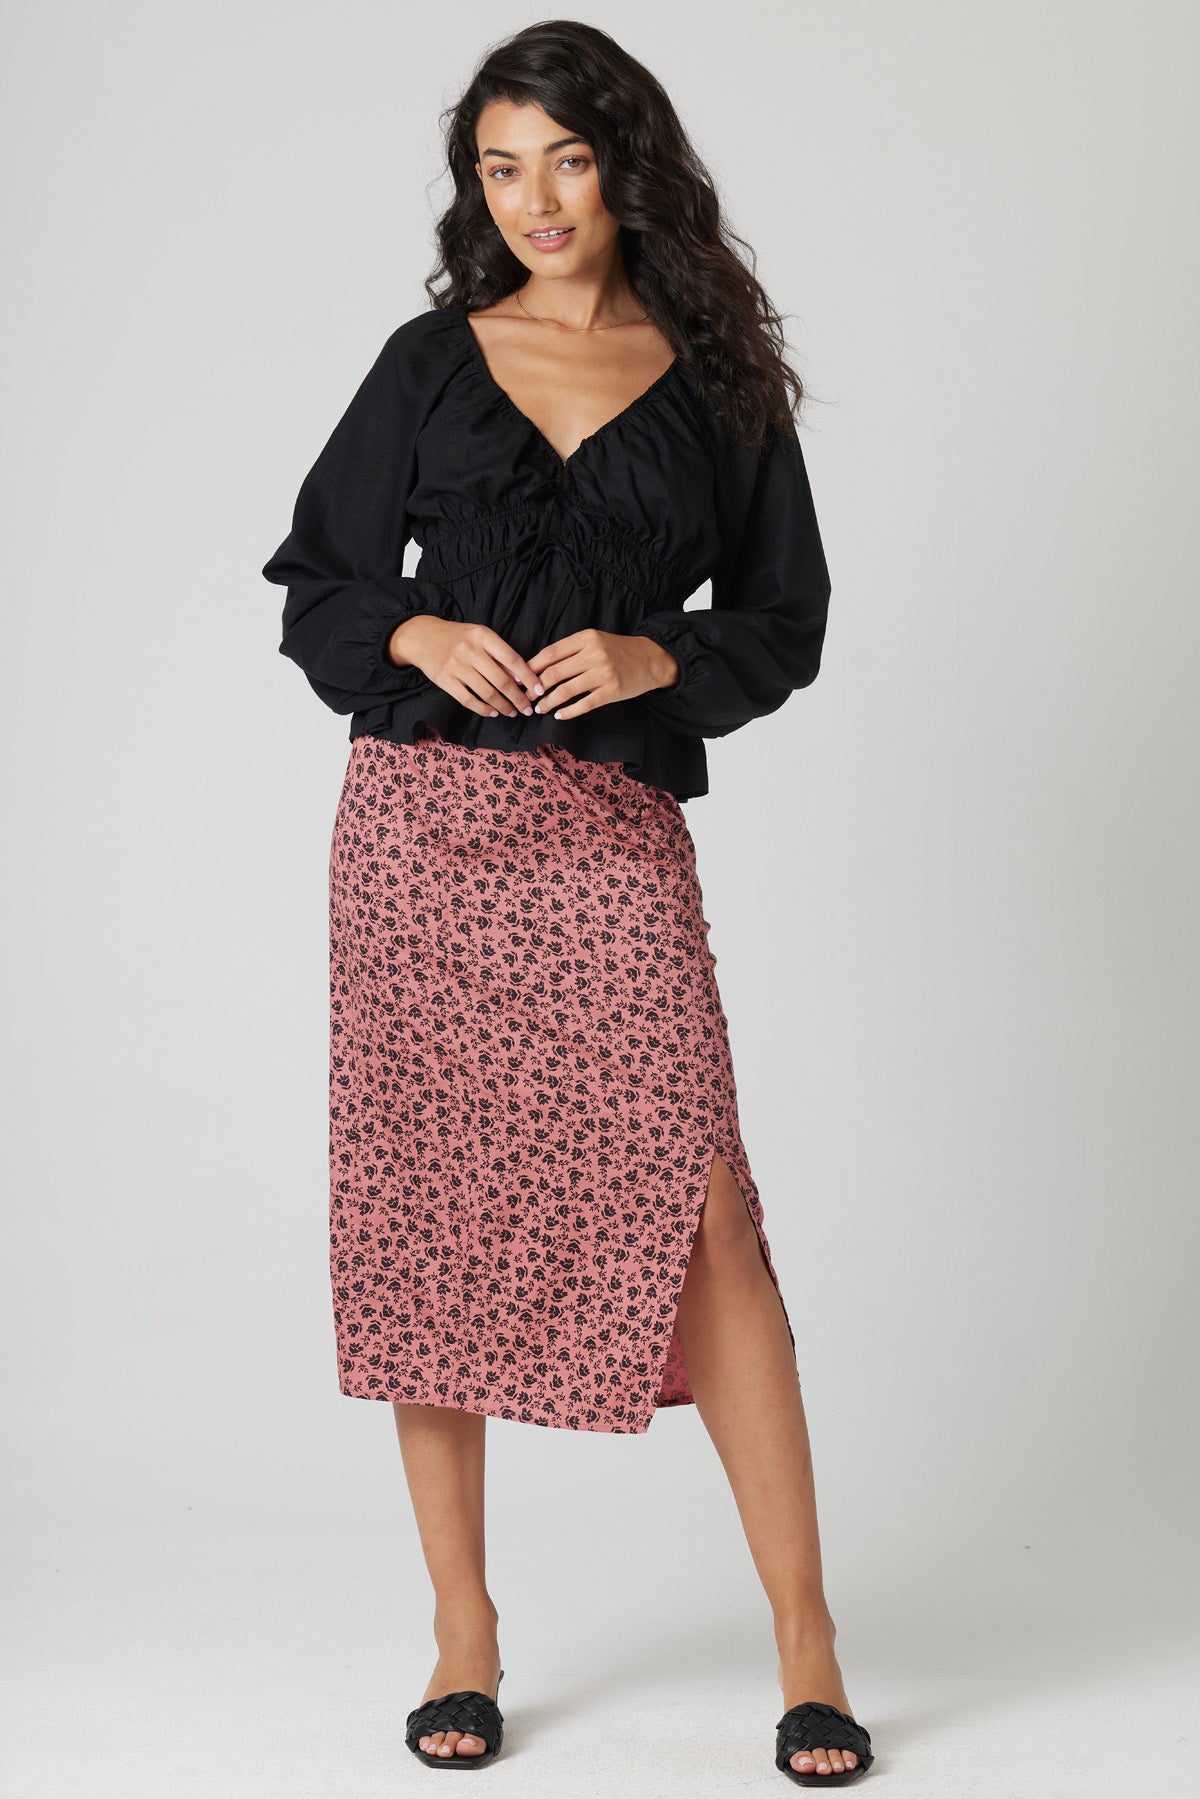 Nassau Skirt